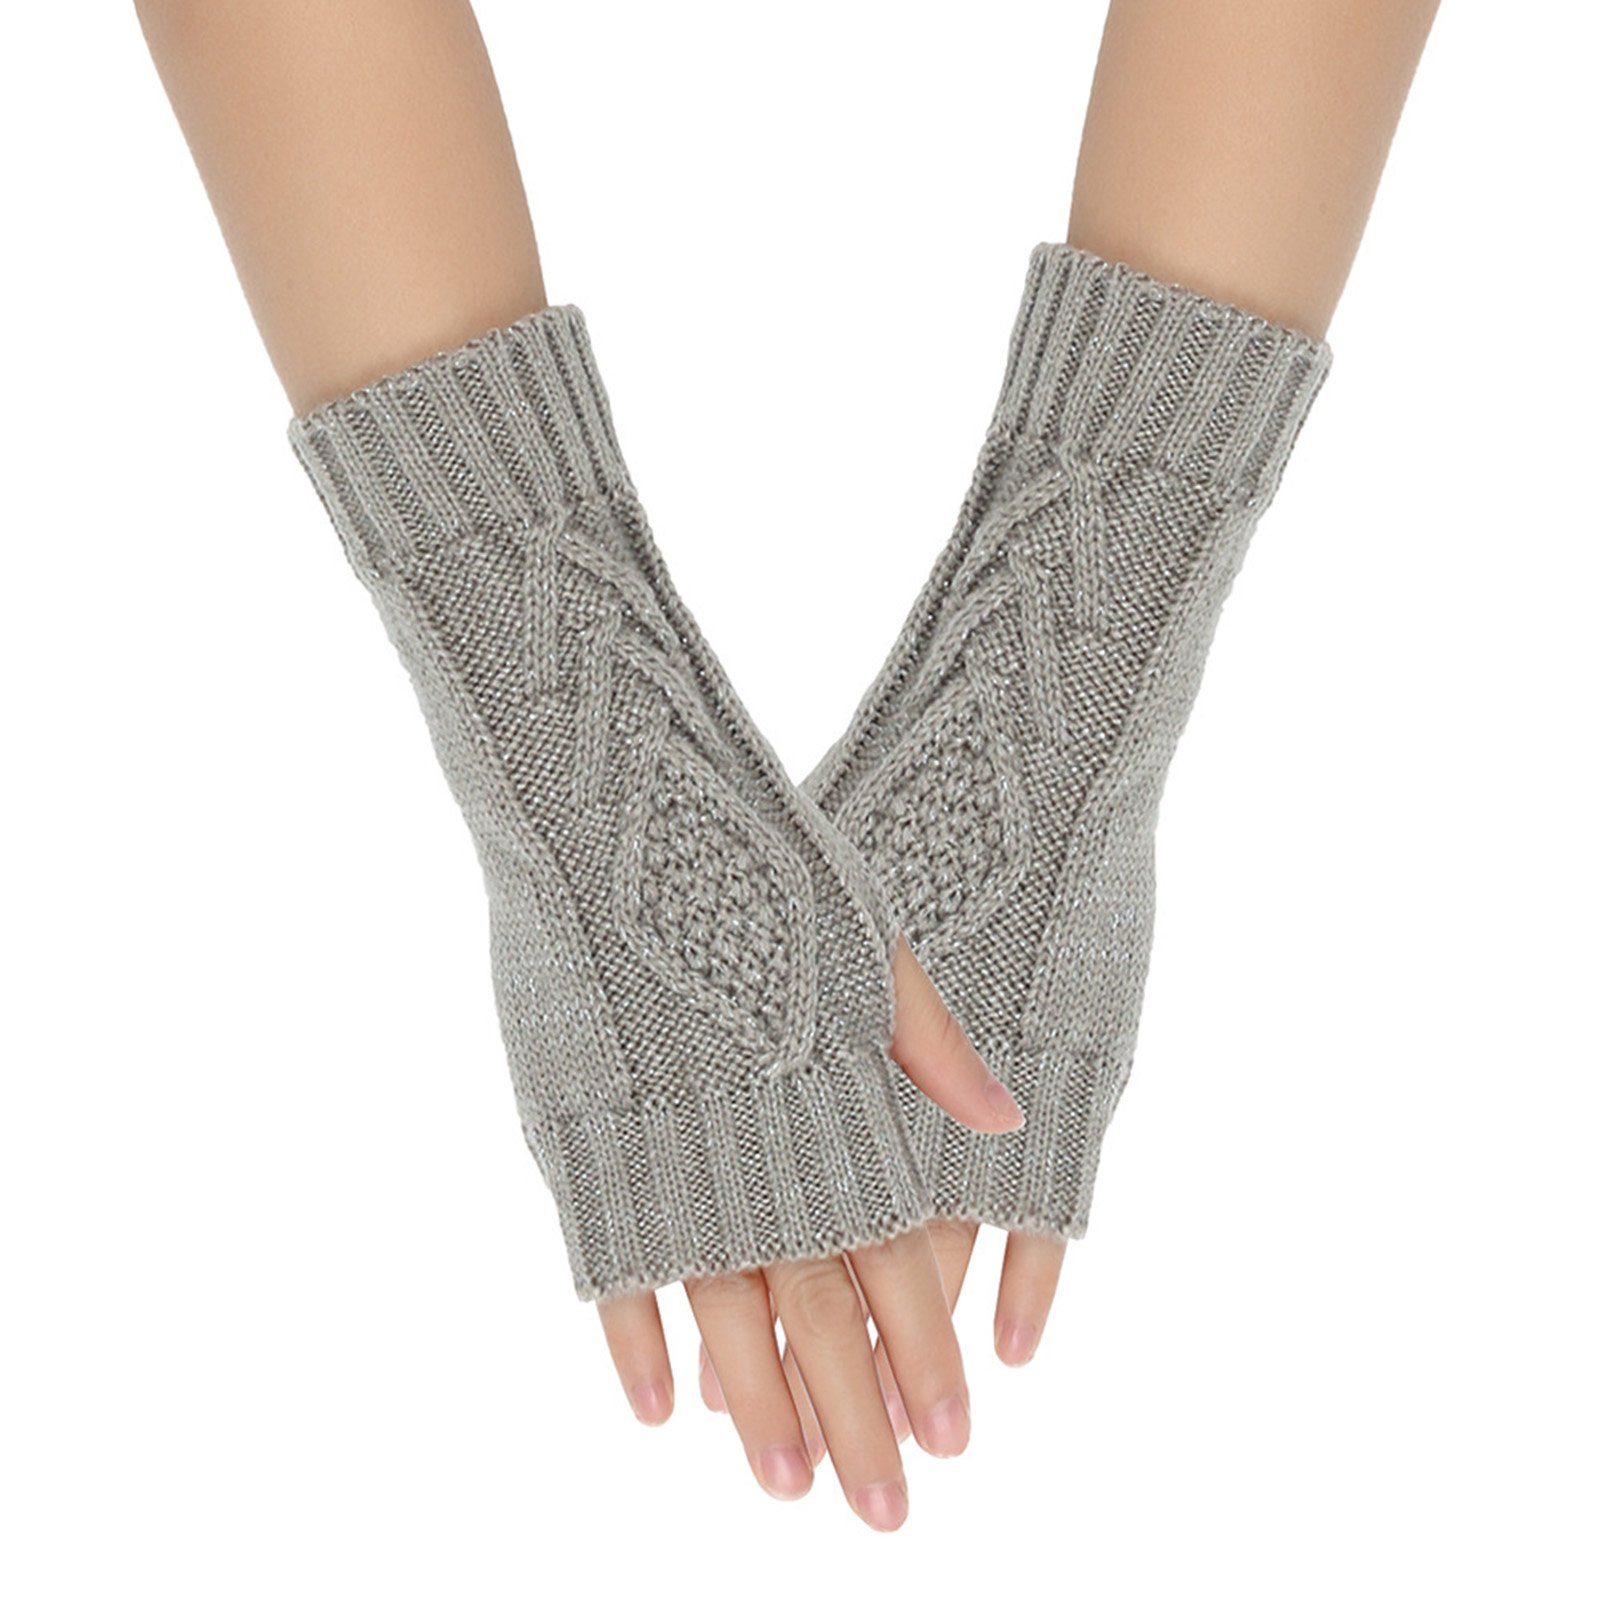 Trikot-Handschuhe Paar Fäustlinge Wärmer Winter Strick Rutaqian Fingerhandschuhe, Weiß 1 Halb